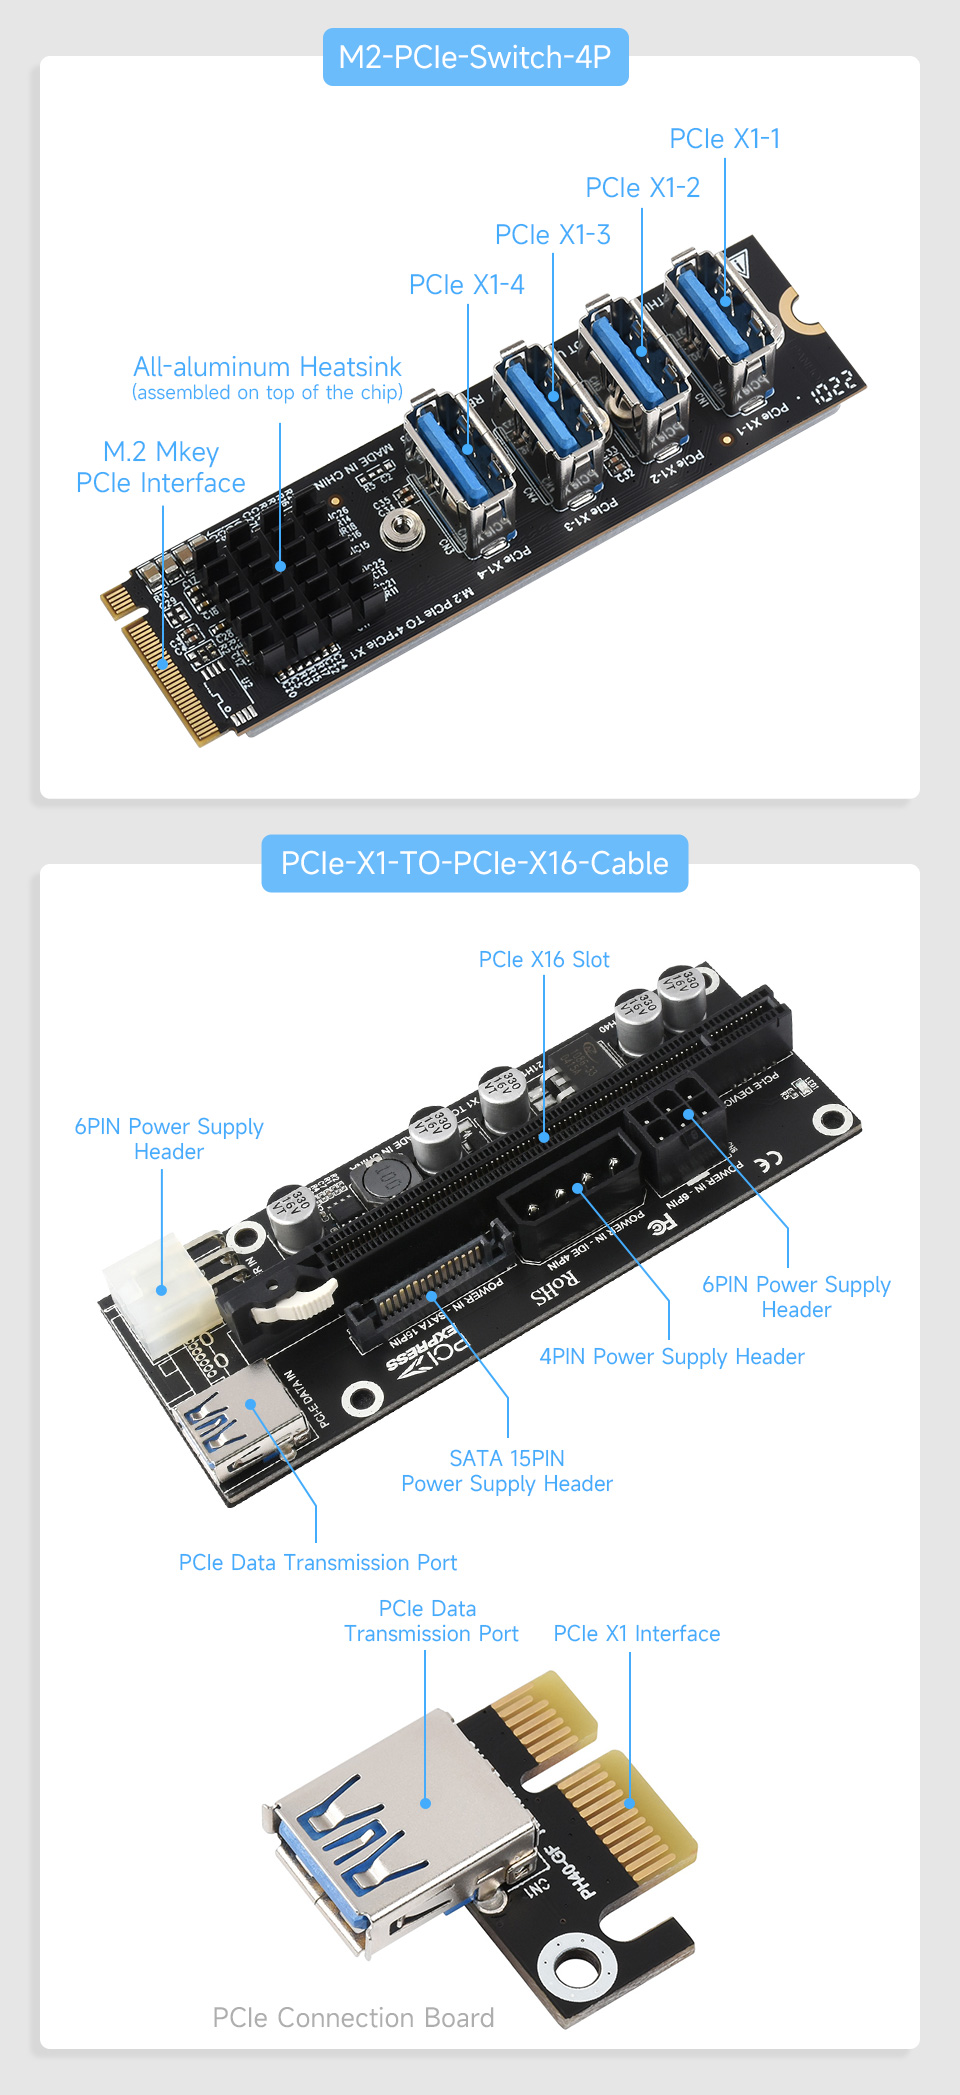 M2-PCIe-Switch-4P-details-3.jpg